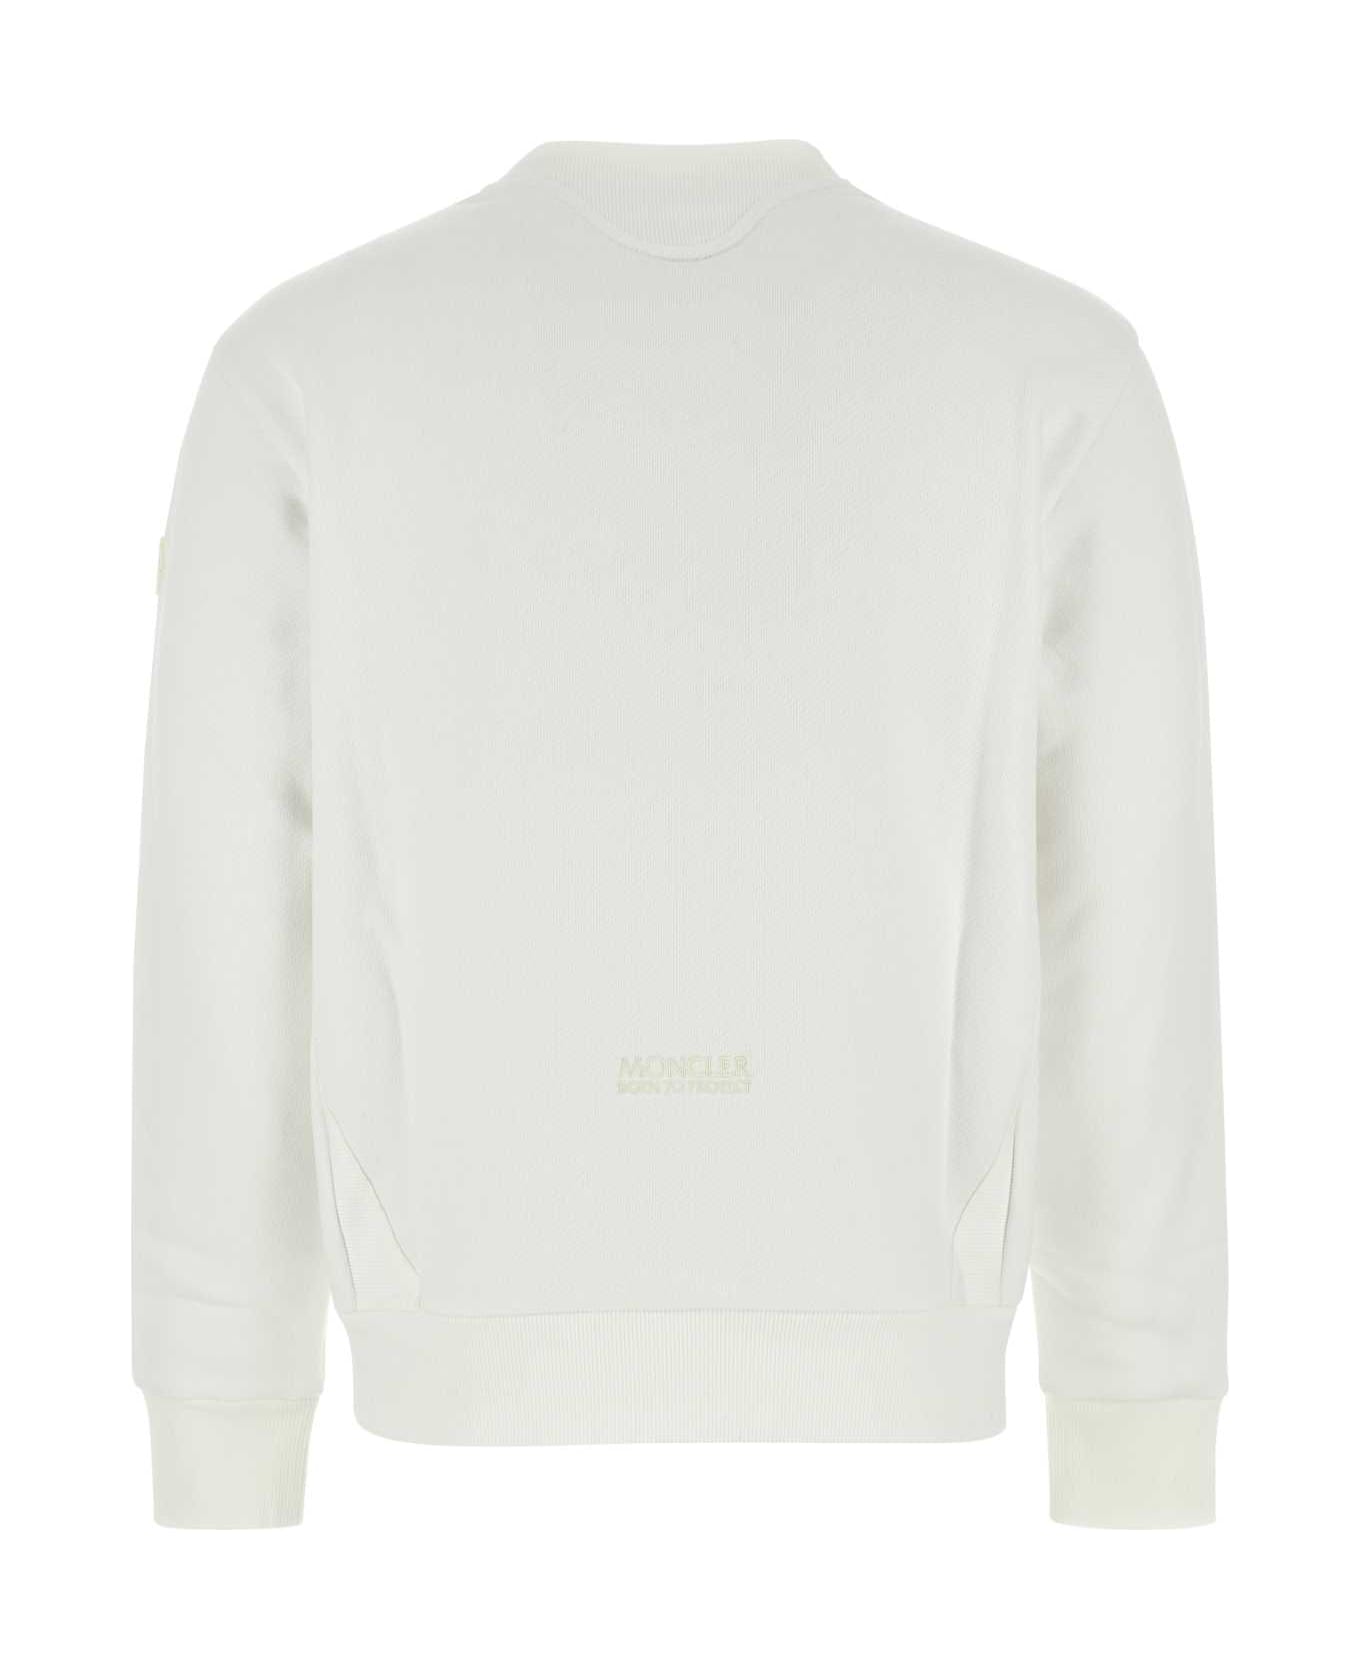 Moncler White Cotton Sweatshirt - 001